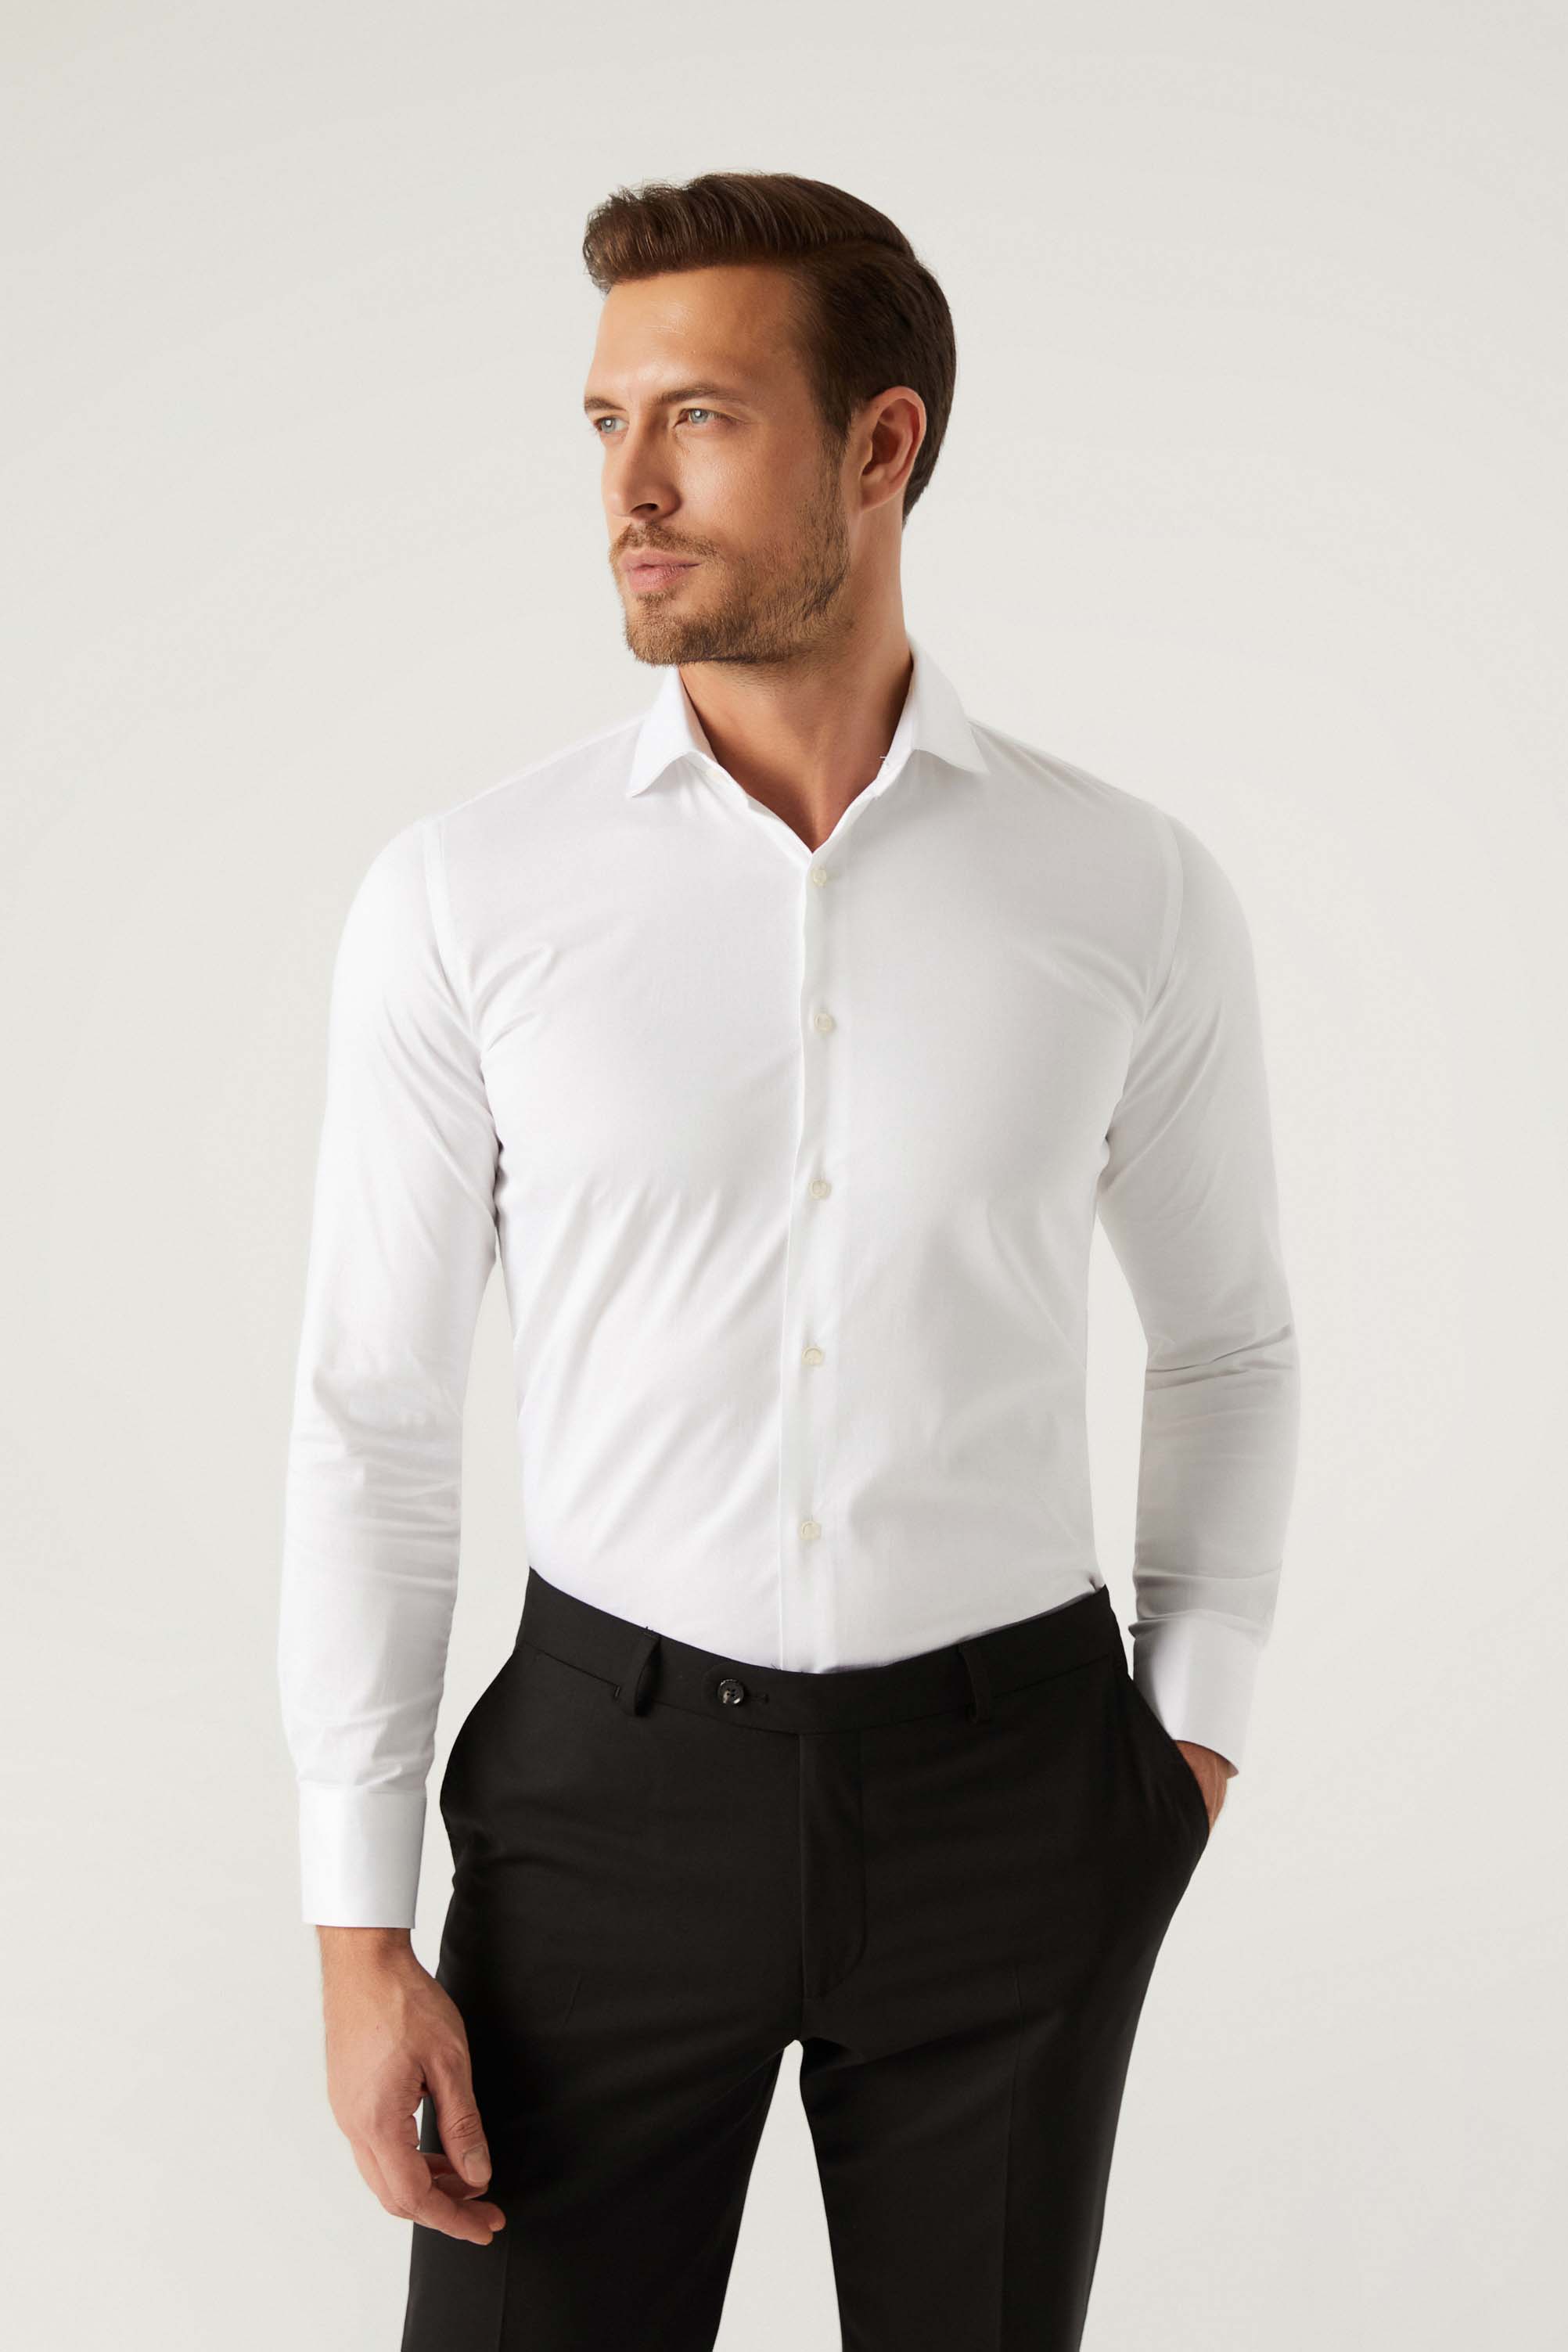 D's Damat White Classic Slim Fit Shirt